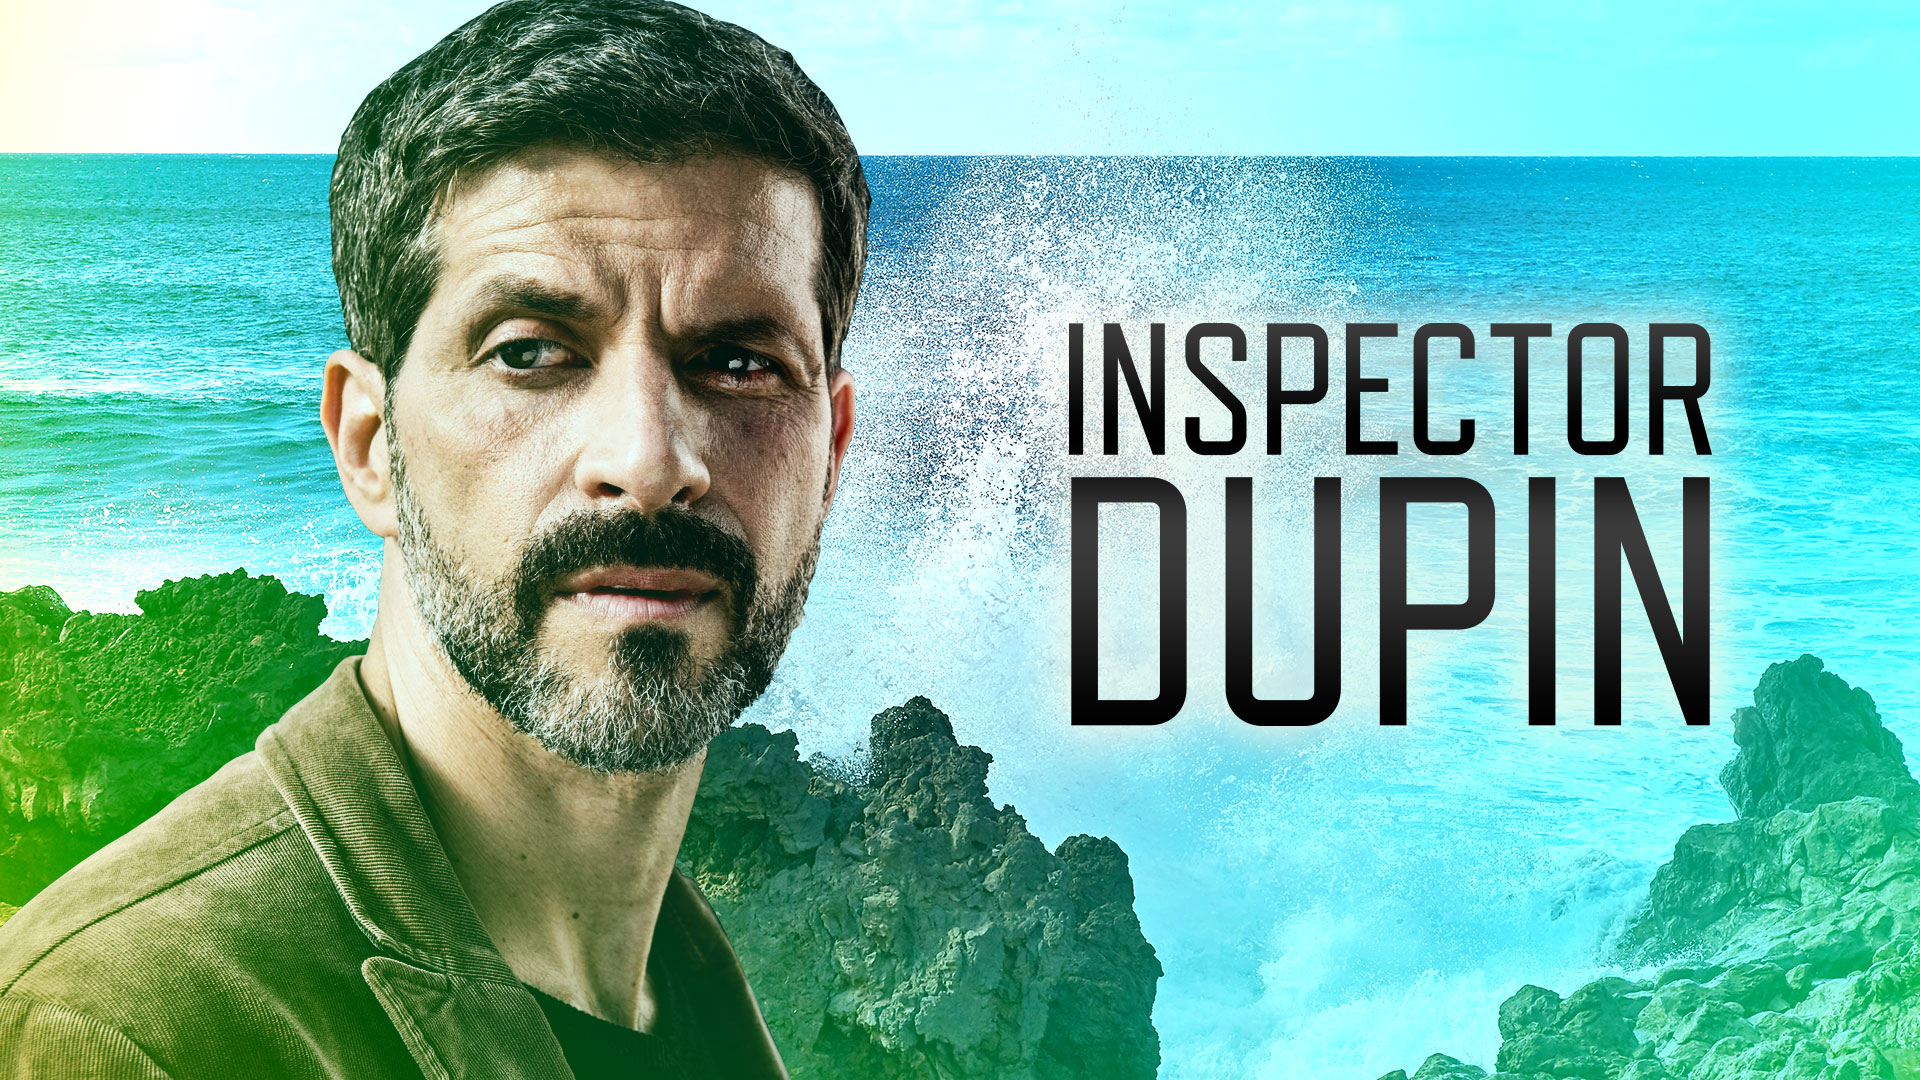 inspector dupin season 1